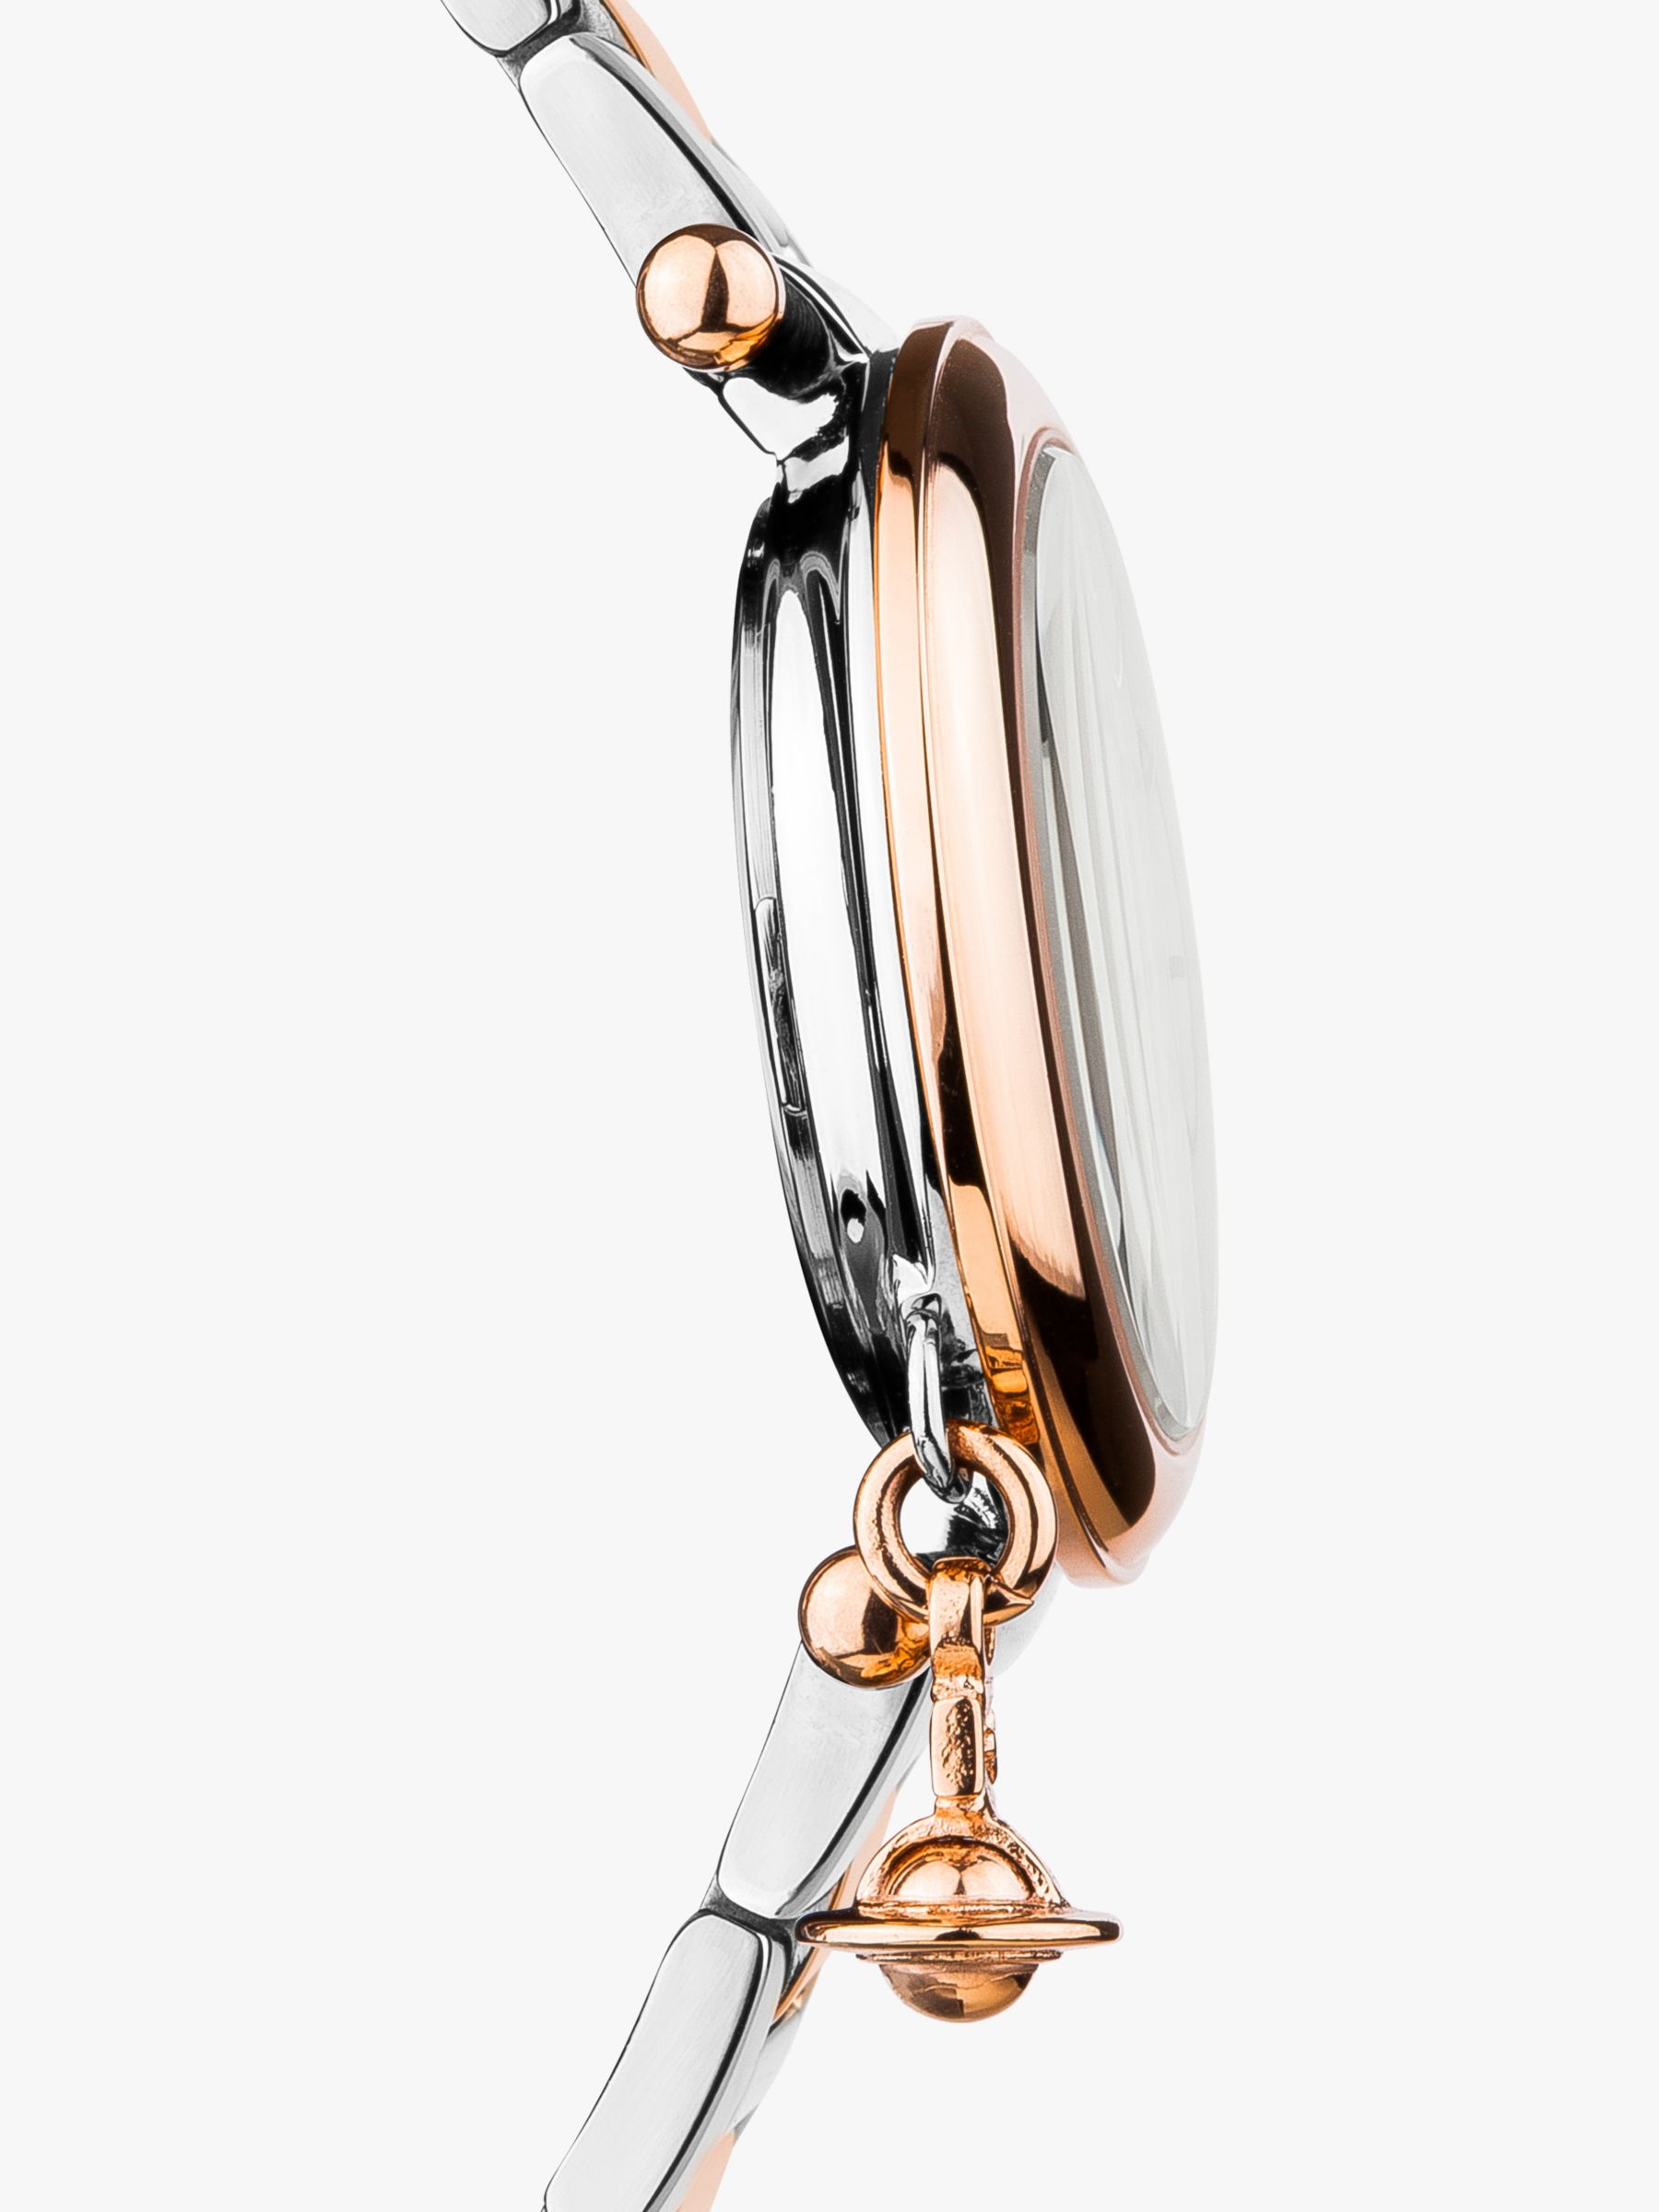 Buy Vivienne Westwood VV006SLRS Women's Orb Diamond Bracelet Strap Watch, Silver/Rose Gold Online at johnlewis.com